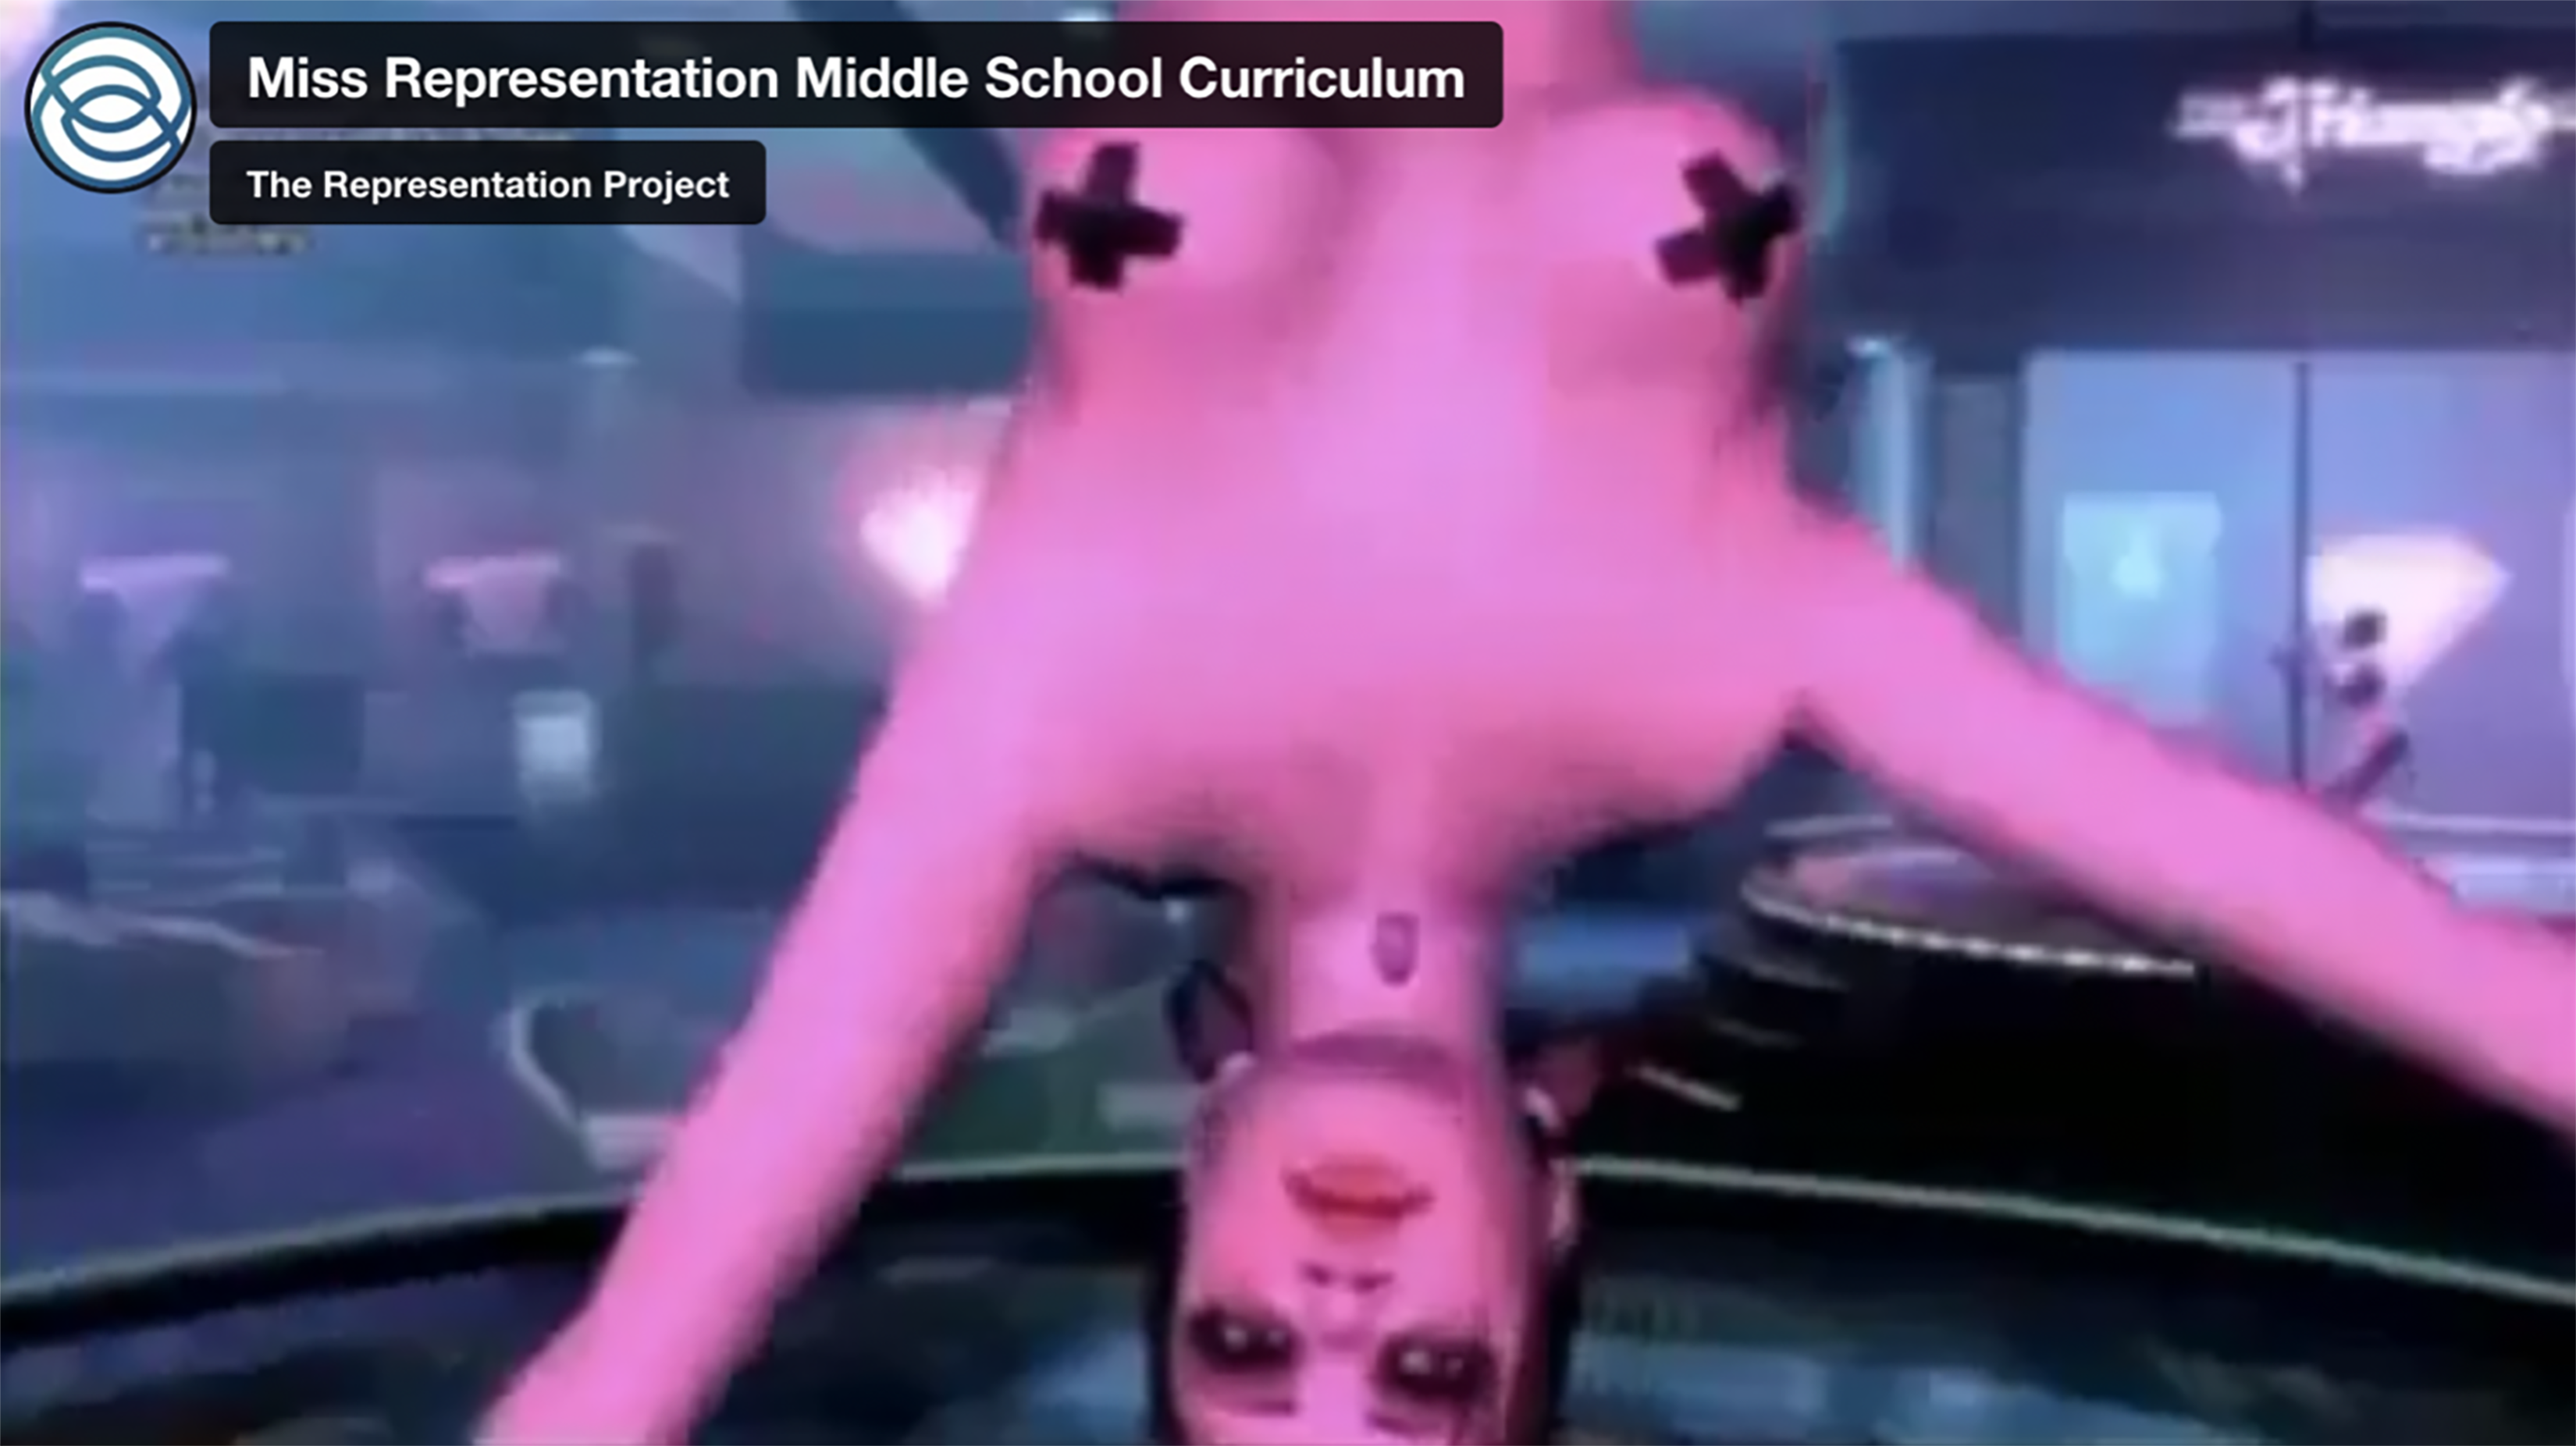 Xxx Sex Vidoes Com - Newsom Twosome: Siebel Newsom's Films â€“ Shown In Middle Schools â€“ Feature  Porn, Radical Gender Ideologies, And Her Husband Gavin